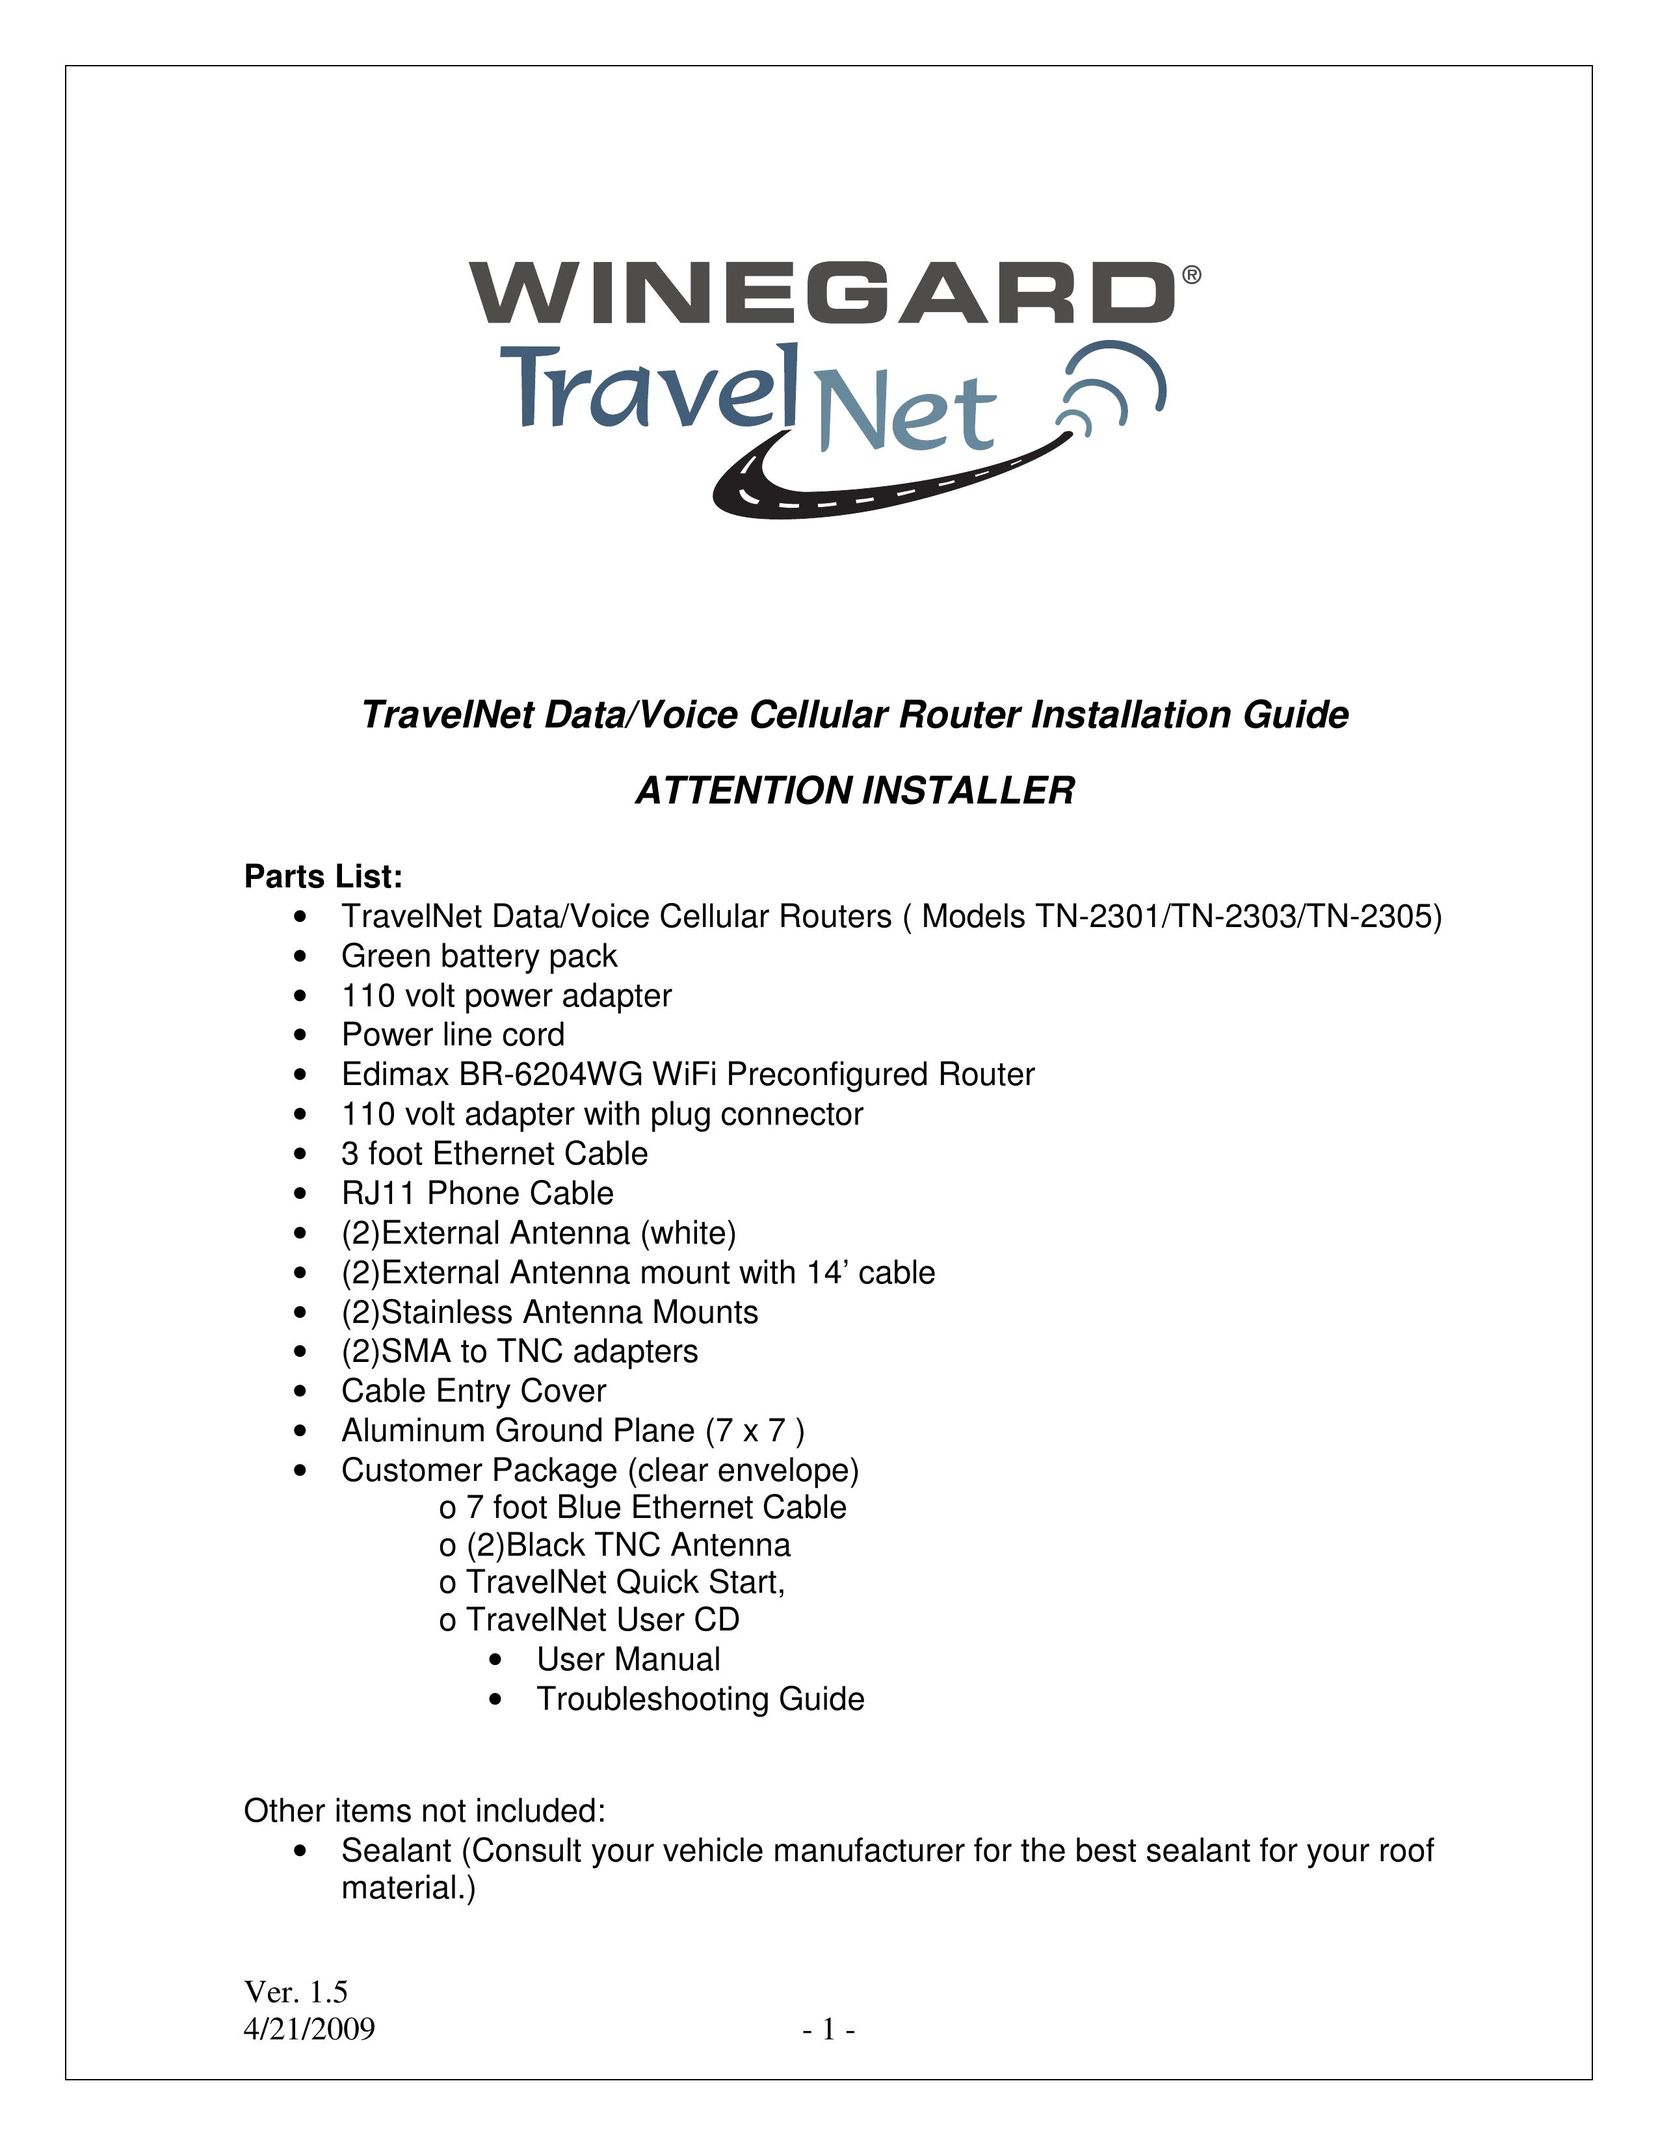 Winegard TN-2305 Network Router User Manual